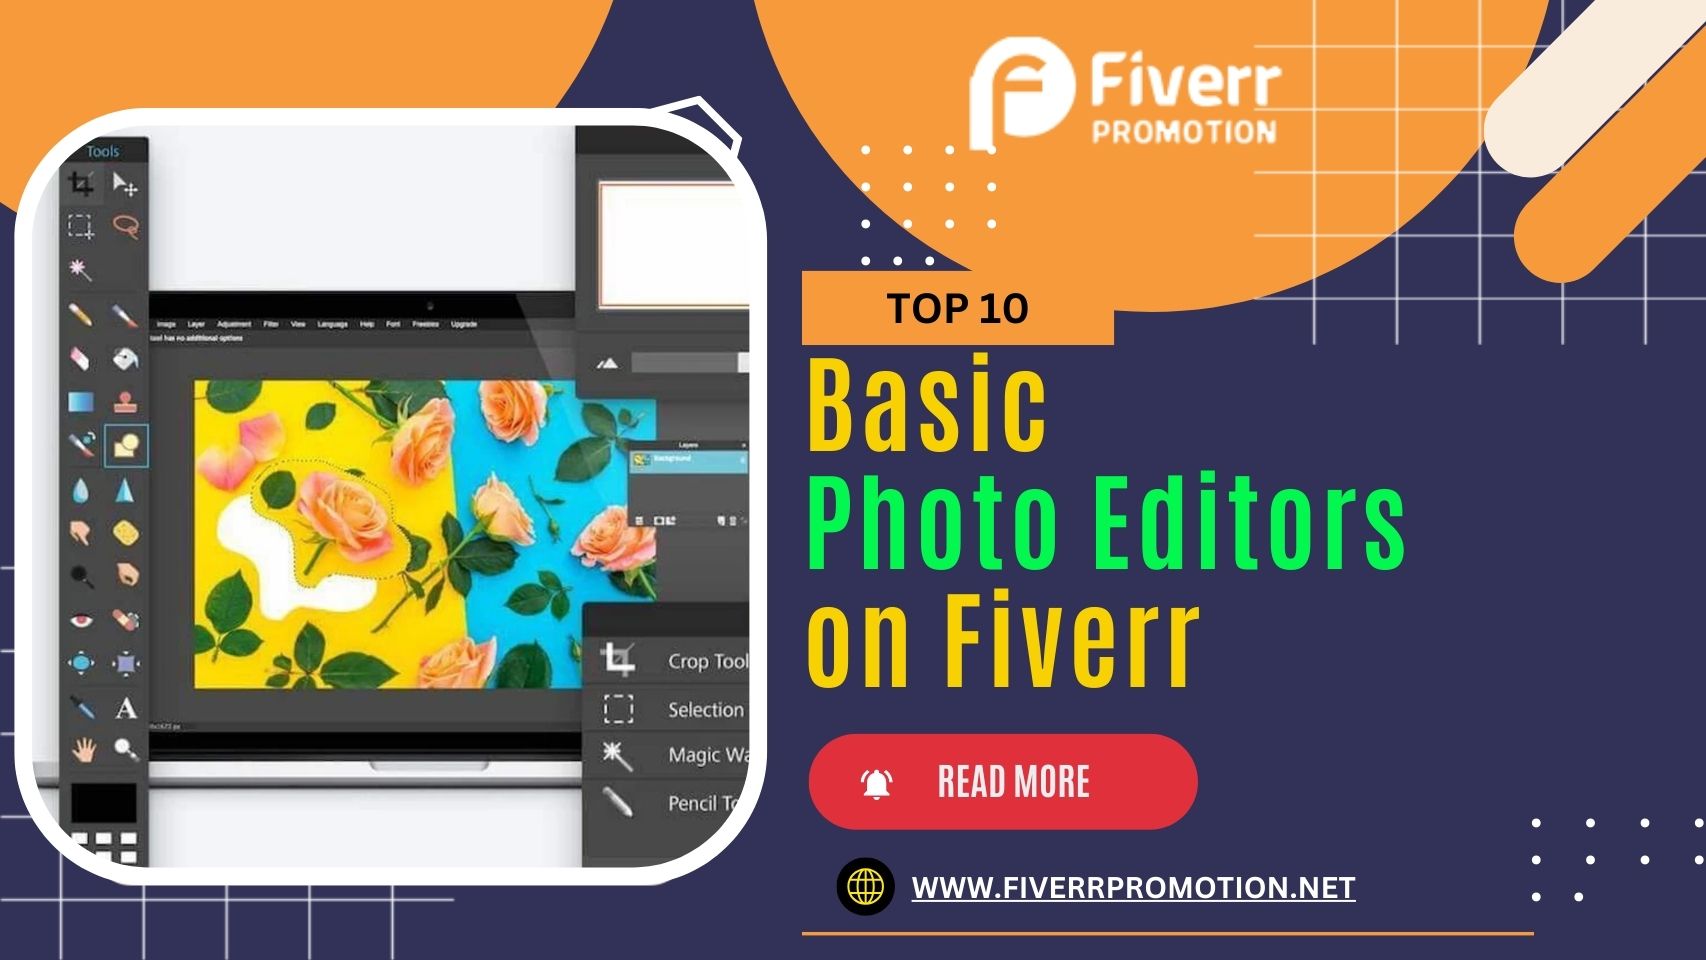 Top 10 Basic Photo Editors on Fiverr